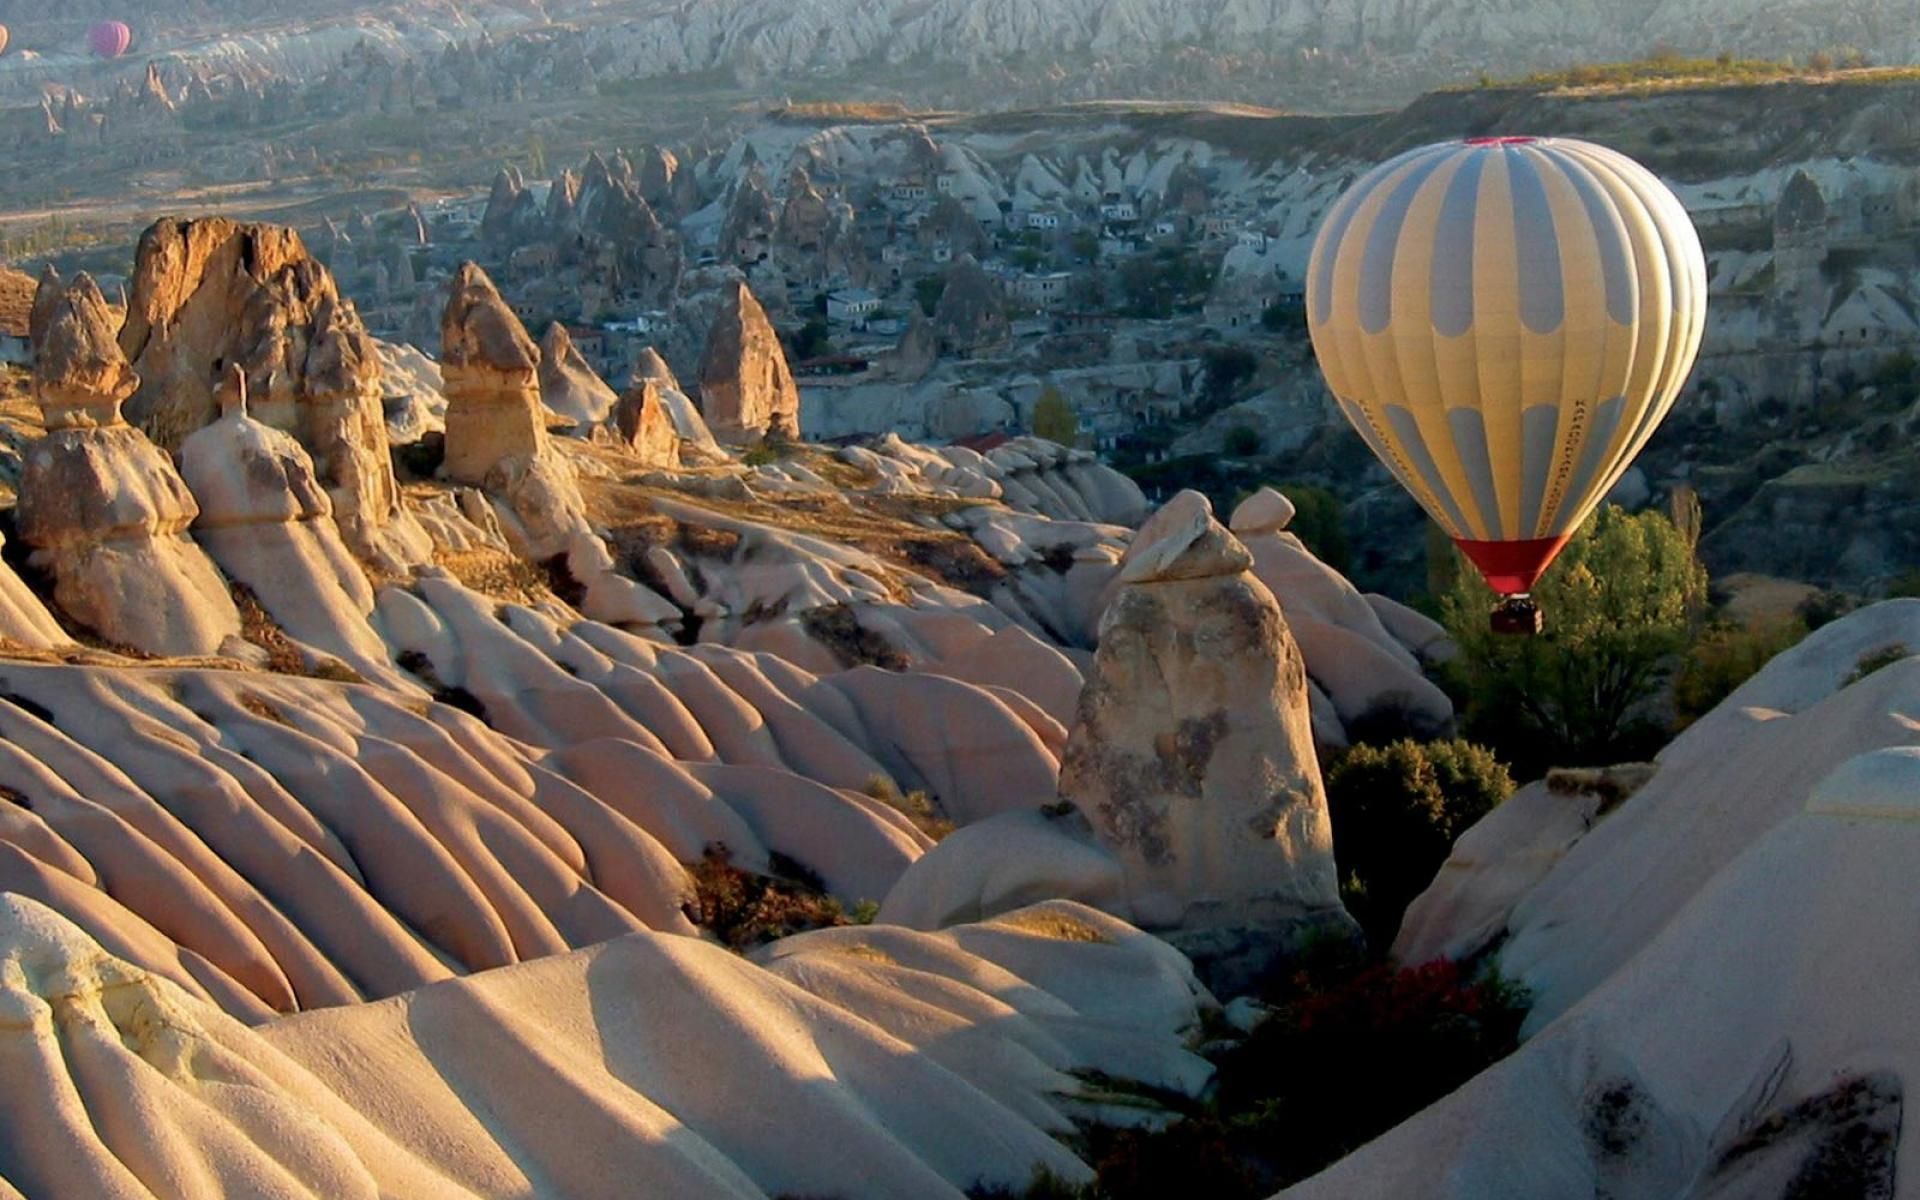 vehicles, hot air balloon, cappadocia images